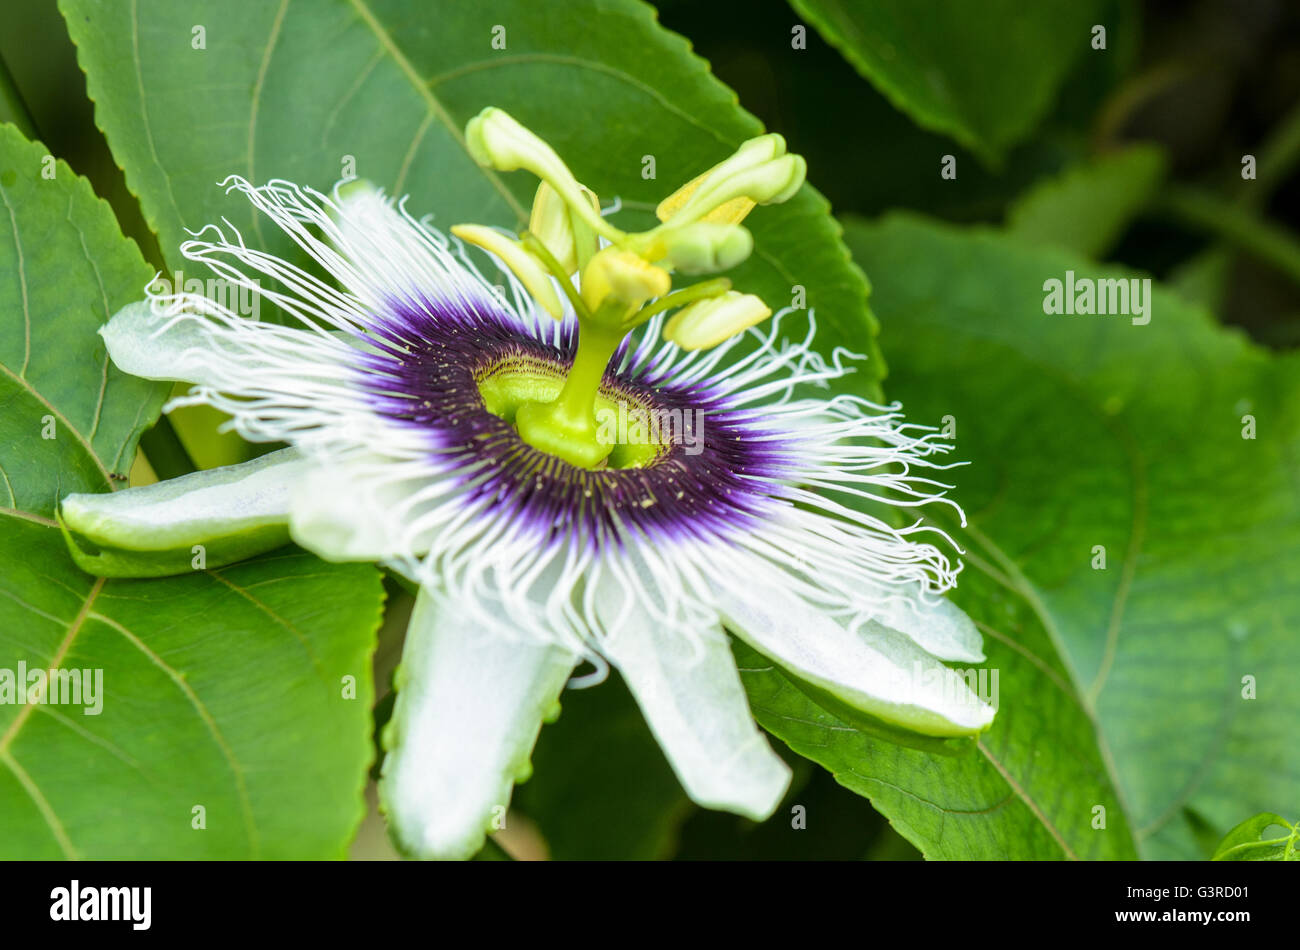 Exotic beautiful white and purple carpel flower of Passiflora Foetida or Wild Maracuja Stock Photo